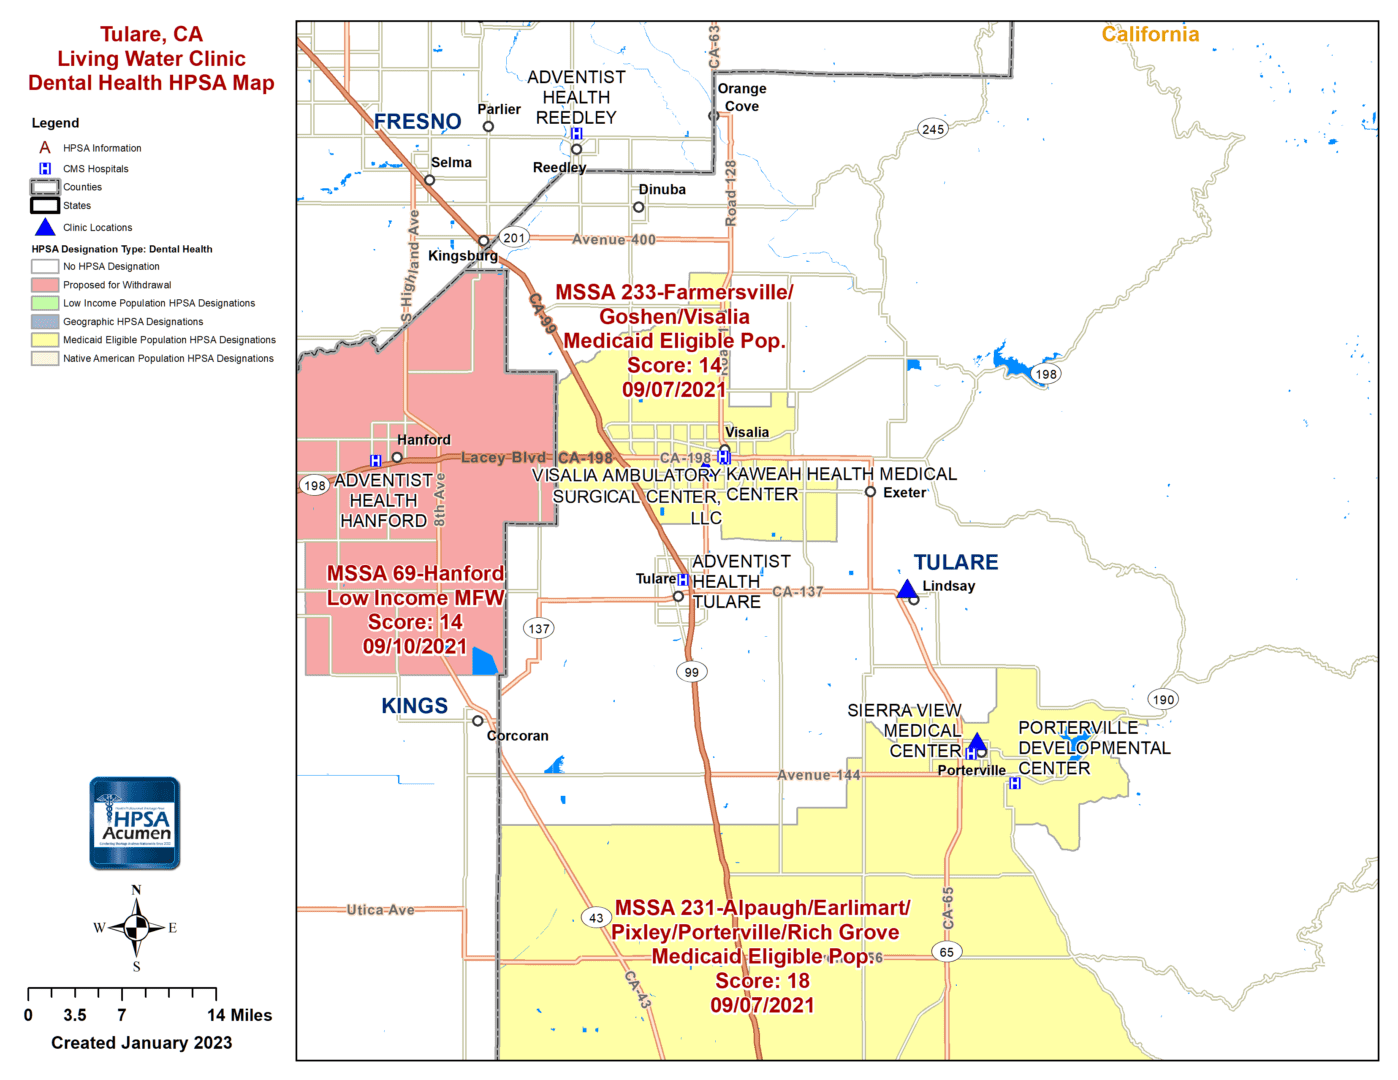 Tulare, CA DH HPSA Map